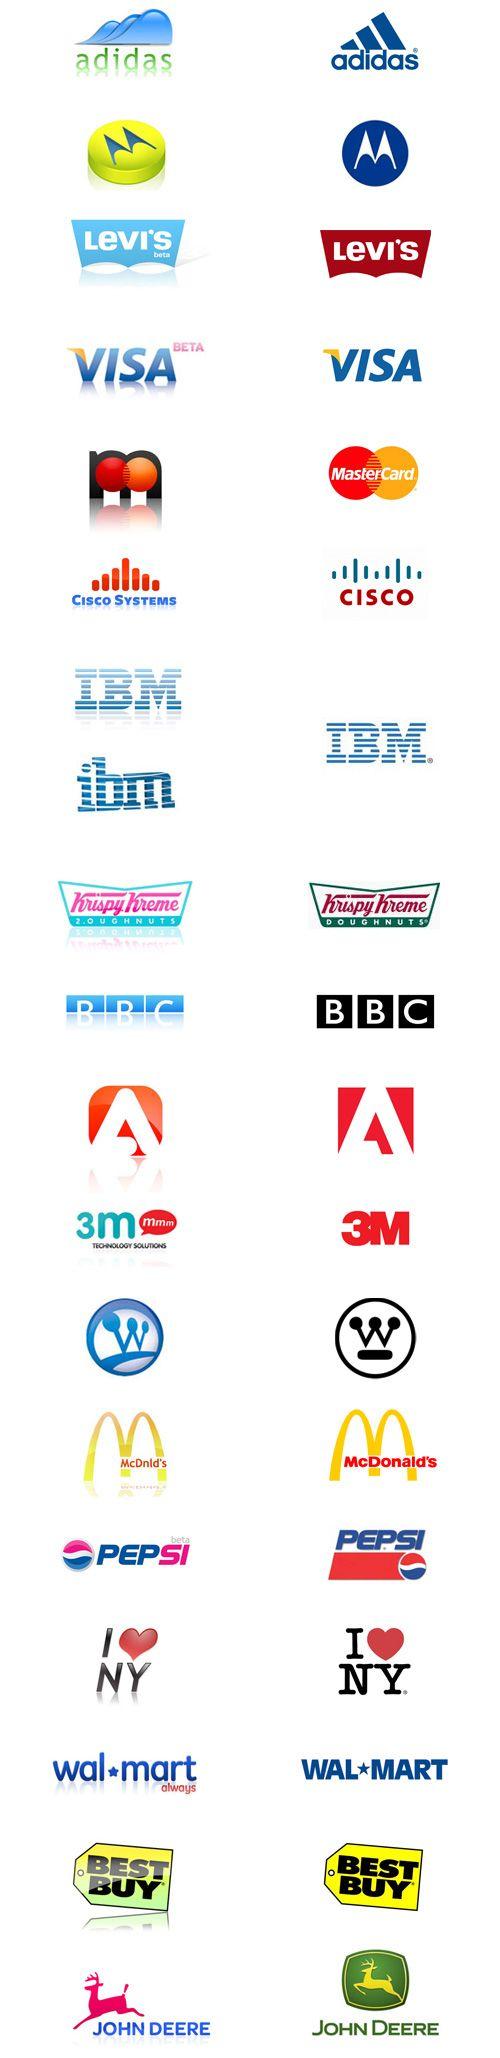 Web 2.0 Logo - web 2.0 logos compared. Logo design • Branding • Graphic design